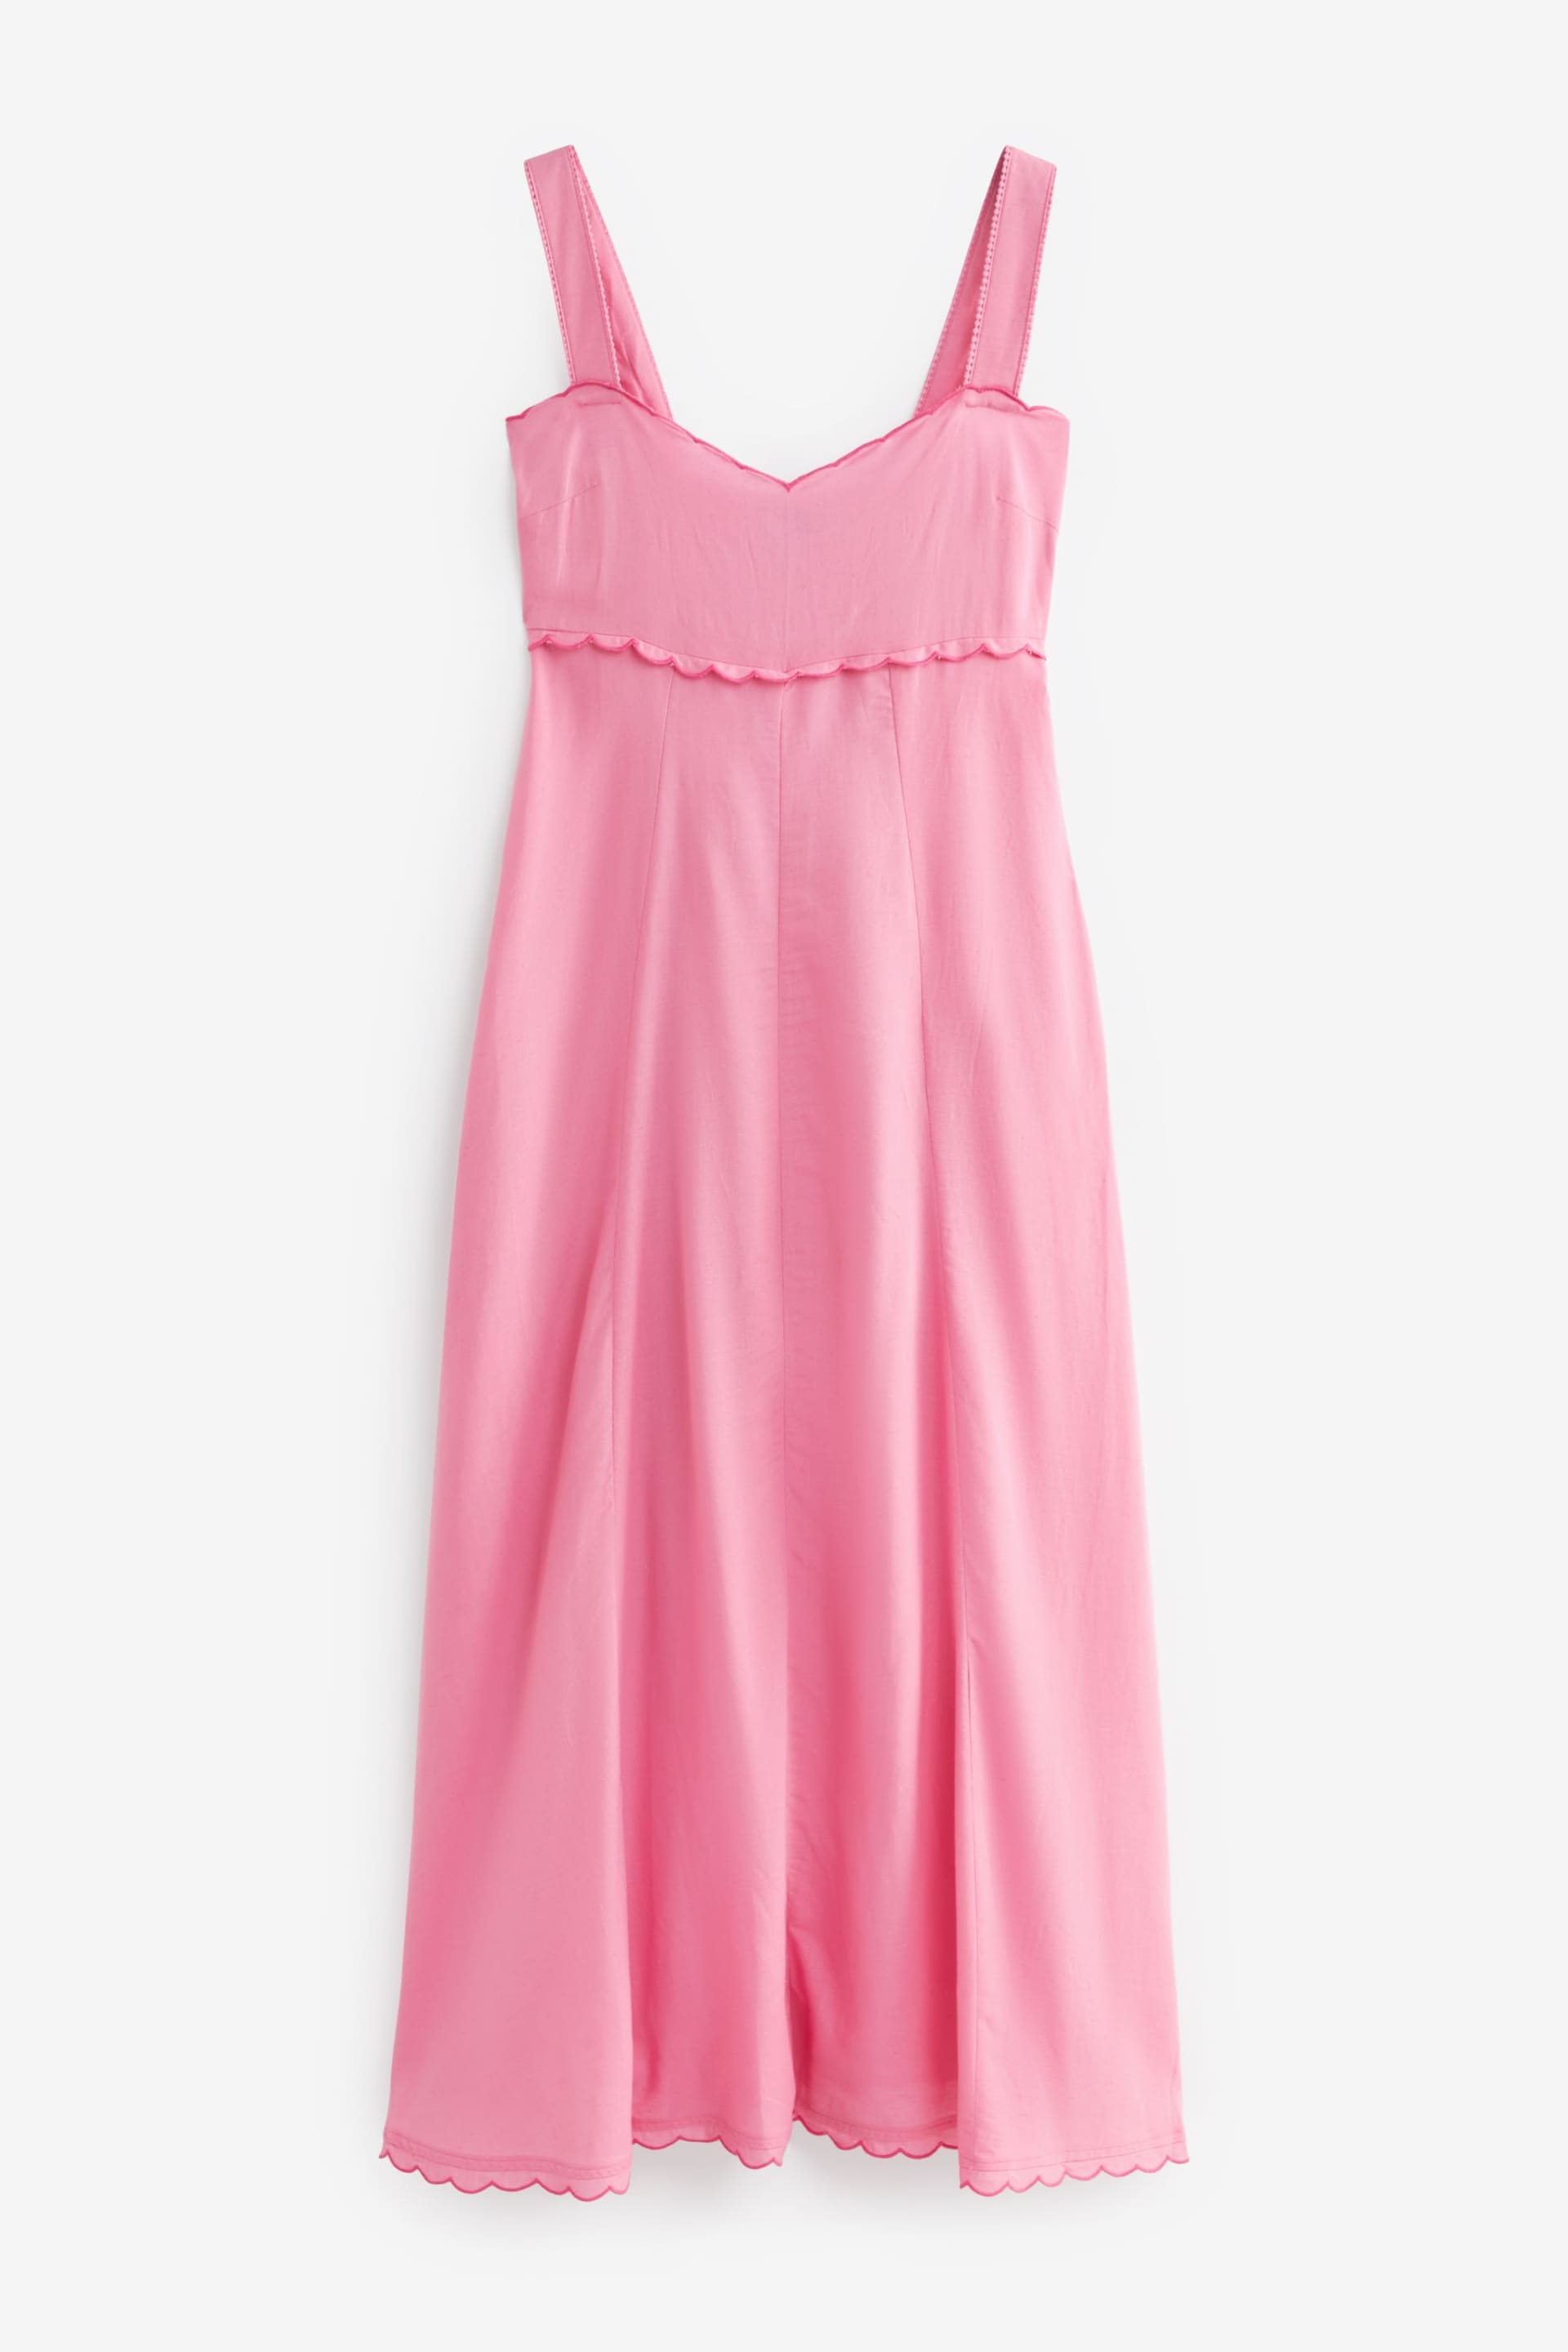 Pink Maxi Summer Dress - Image 7 of 8